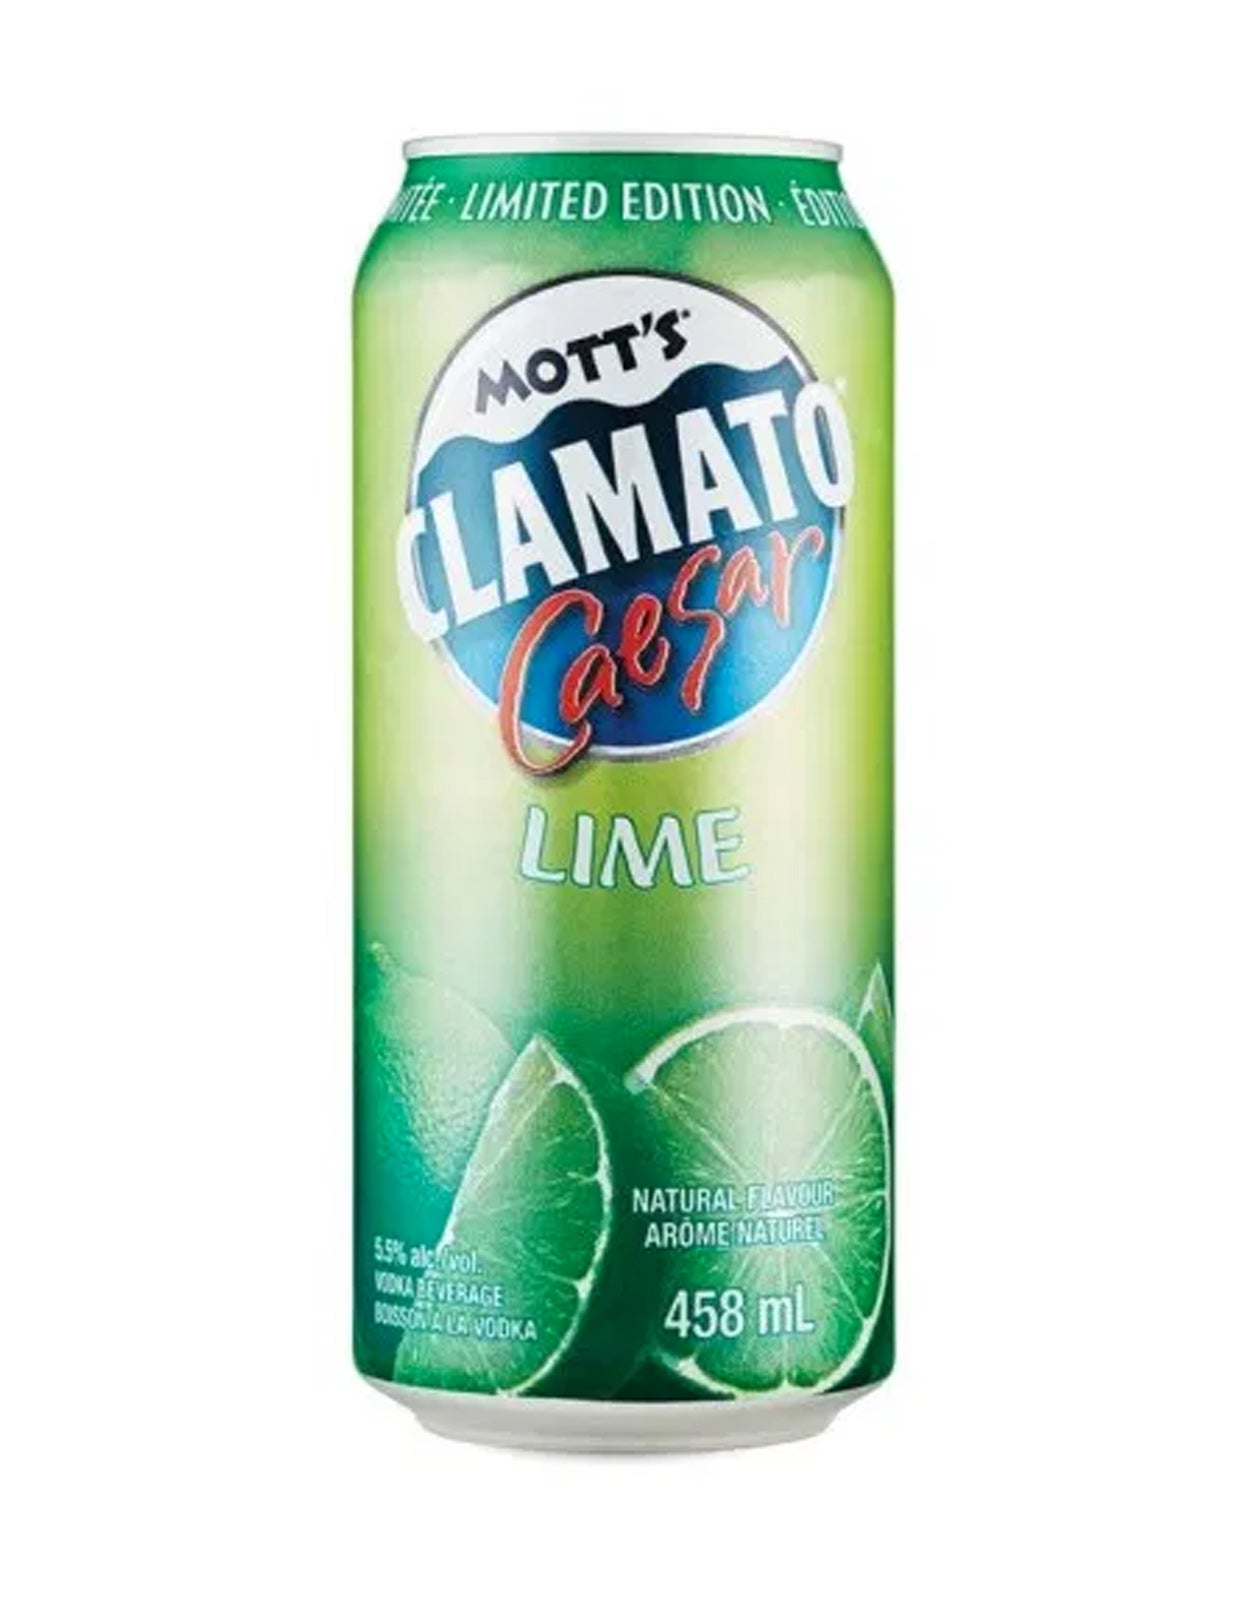 Mott's Clamato Caesar Lime 458 ml - 24 Cans